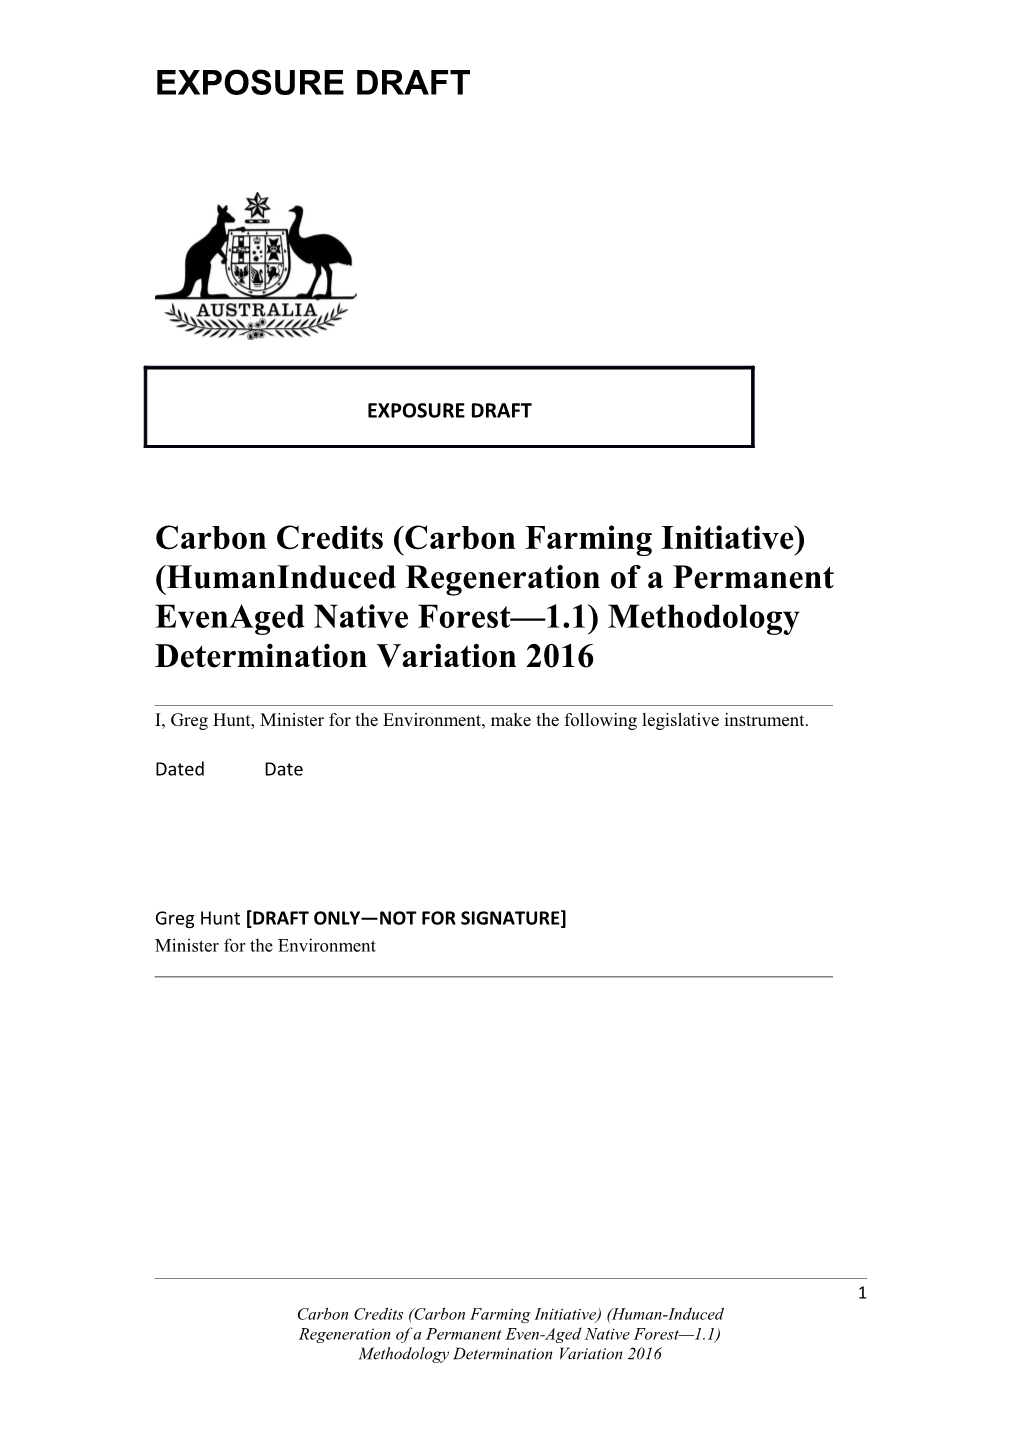 Carbon Credits (Carbon Farming Initiative) (Human Induced Regeneration of a Permanent Even